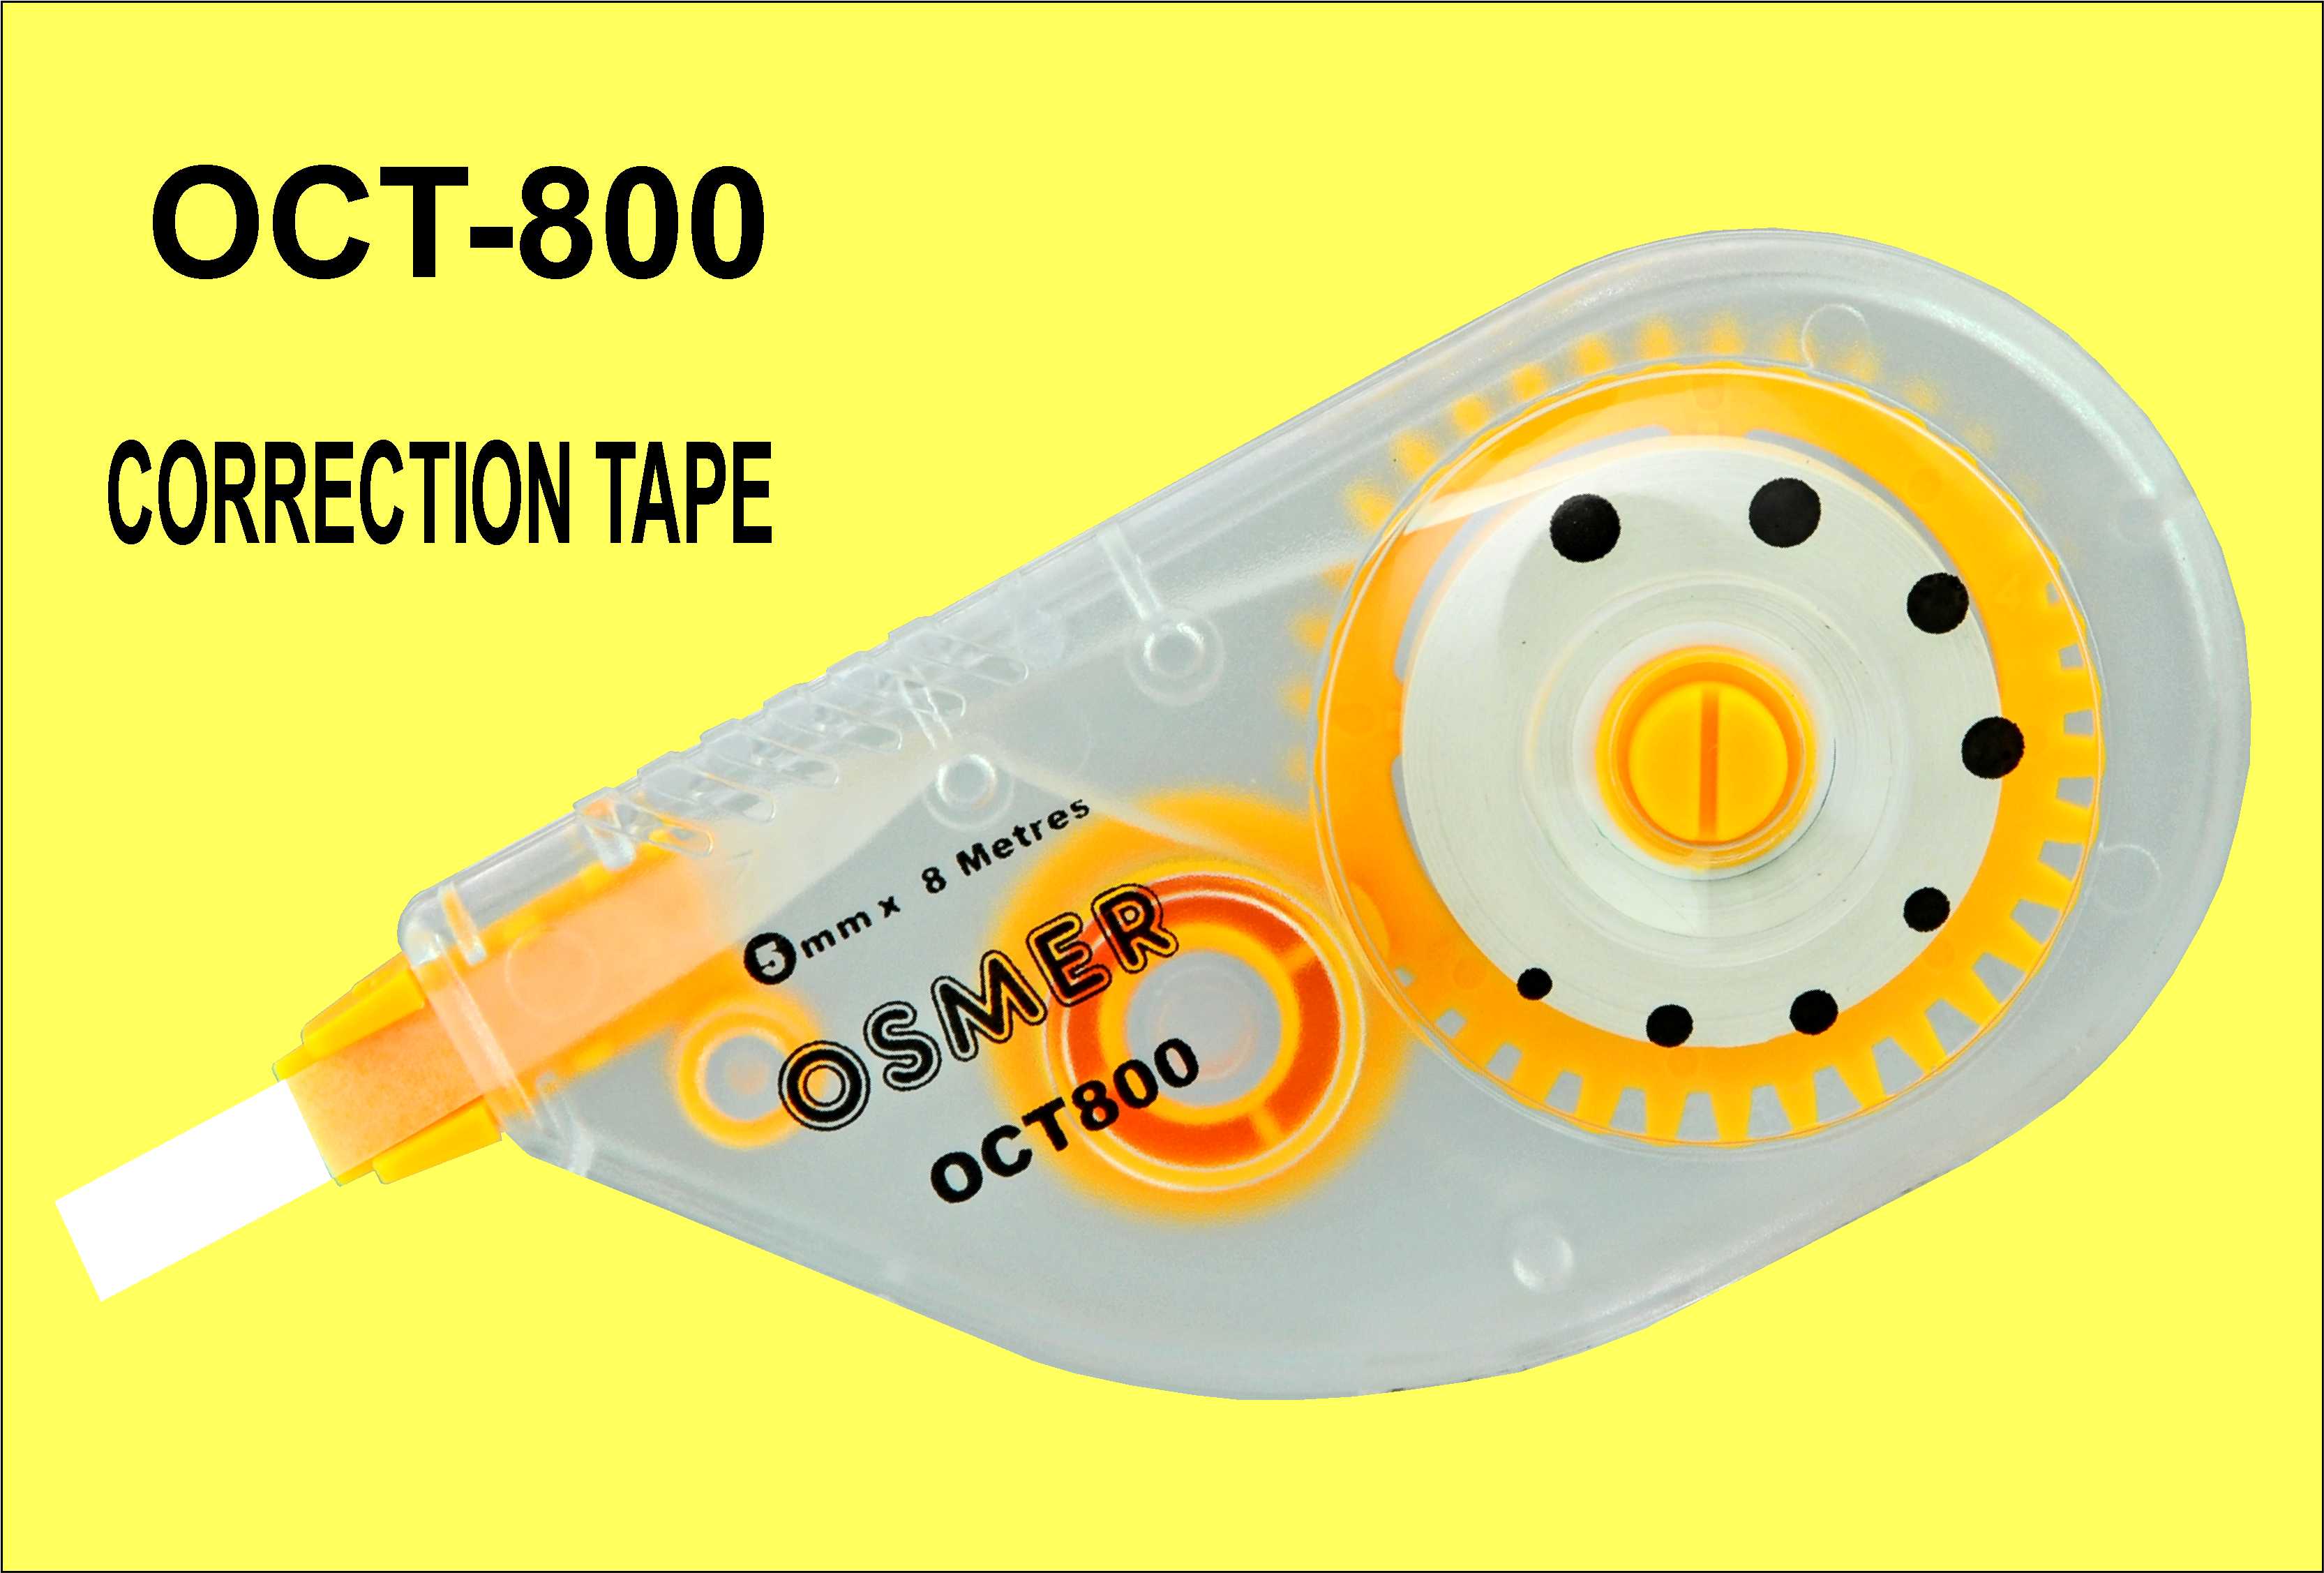 Correction Tape Osmer Sideways 5mm x 8m